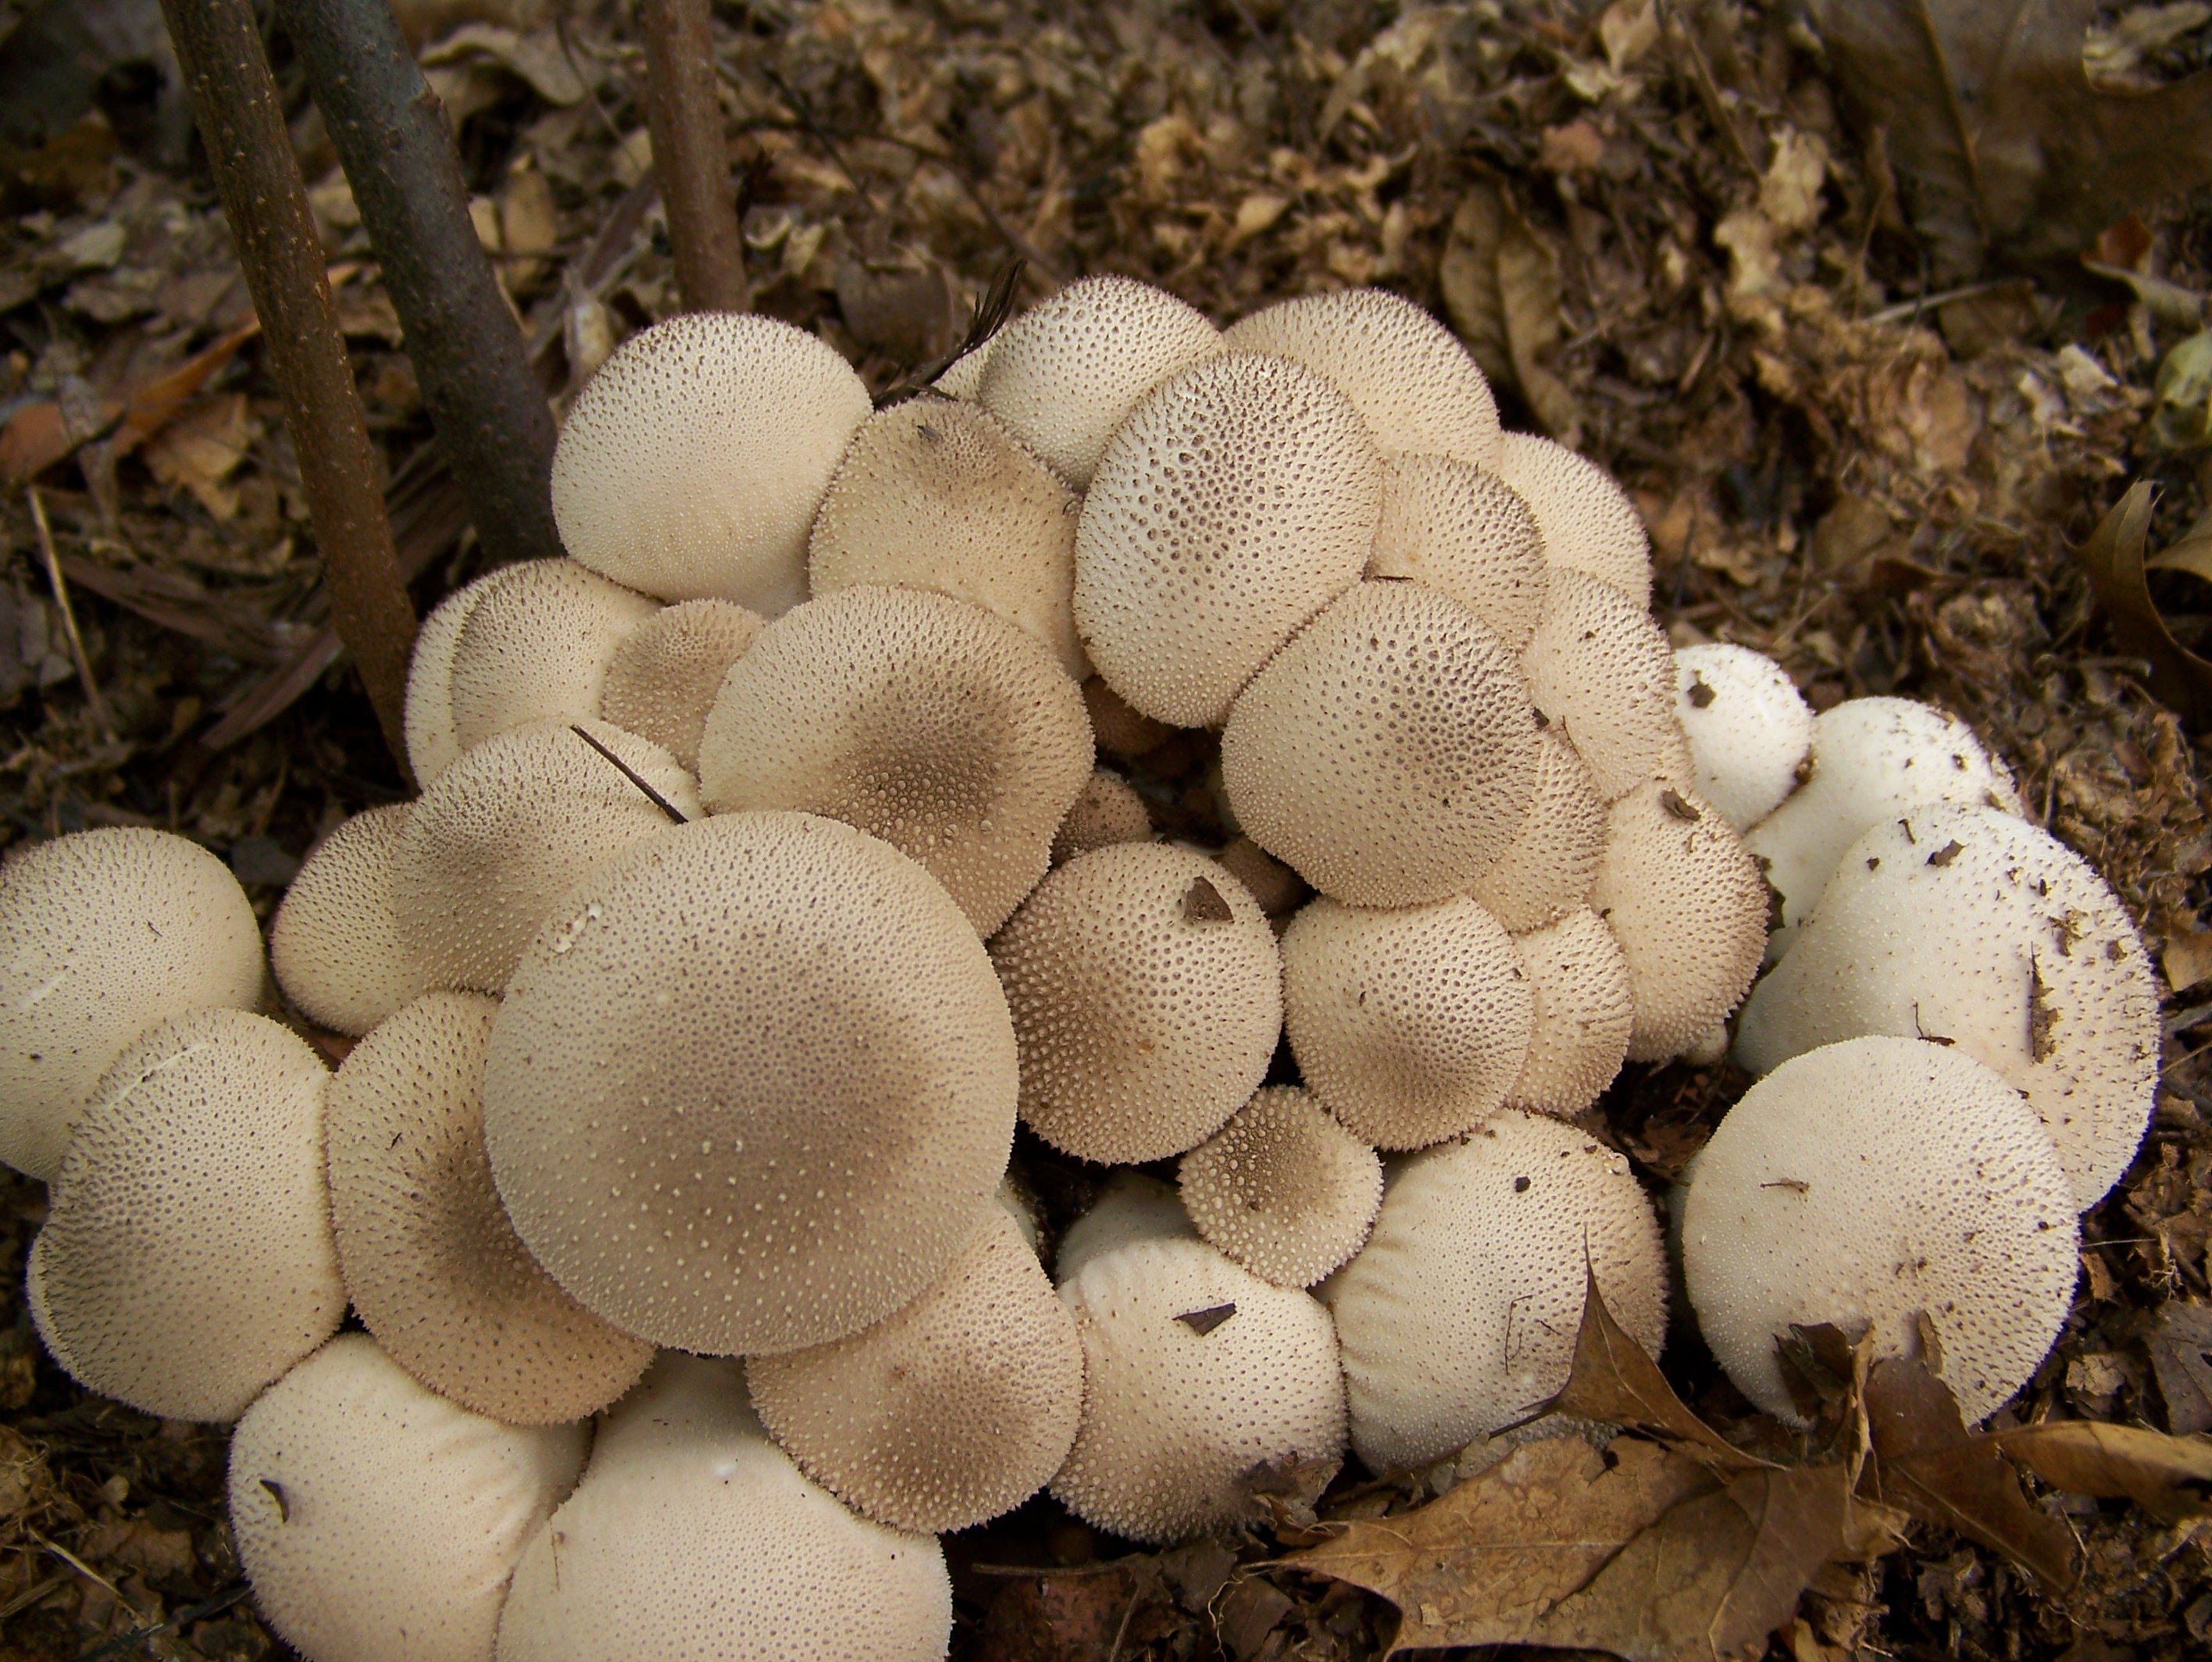 How To Pick Wild Edible Mushrooms - YouTube